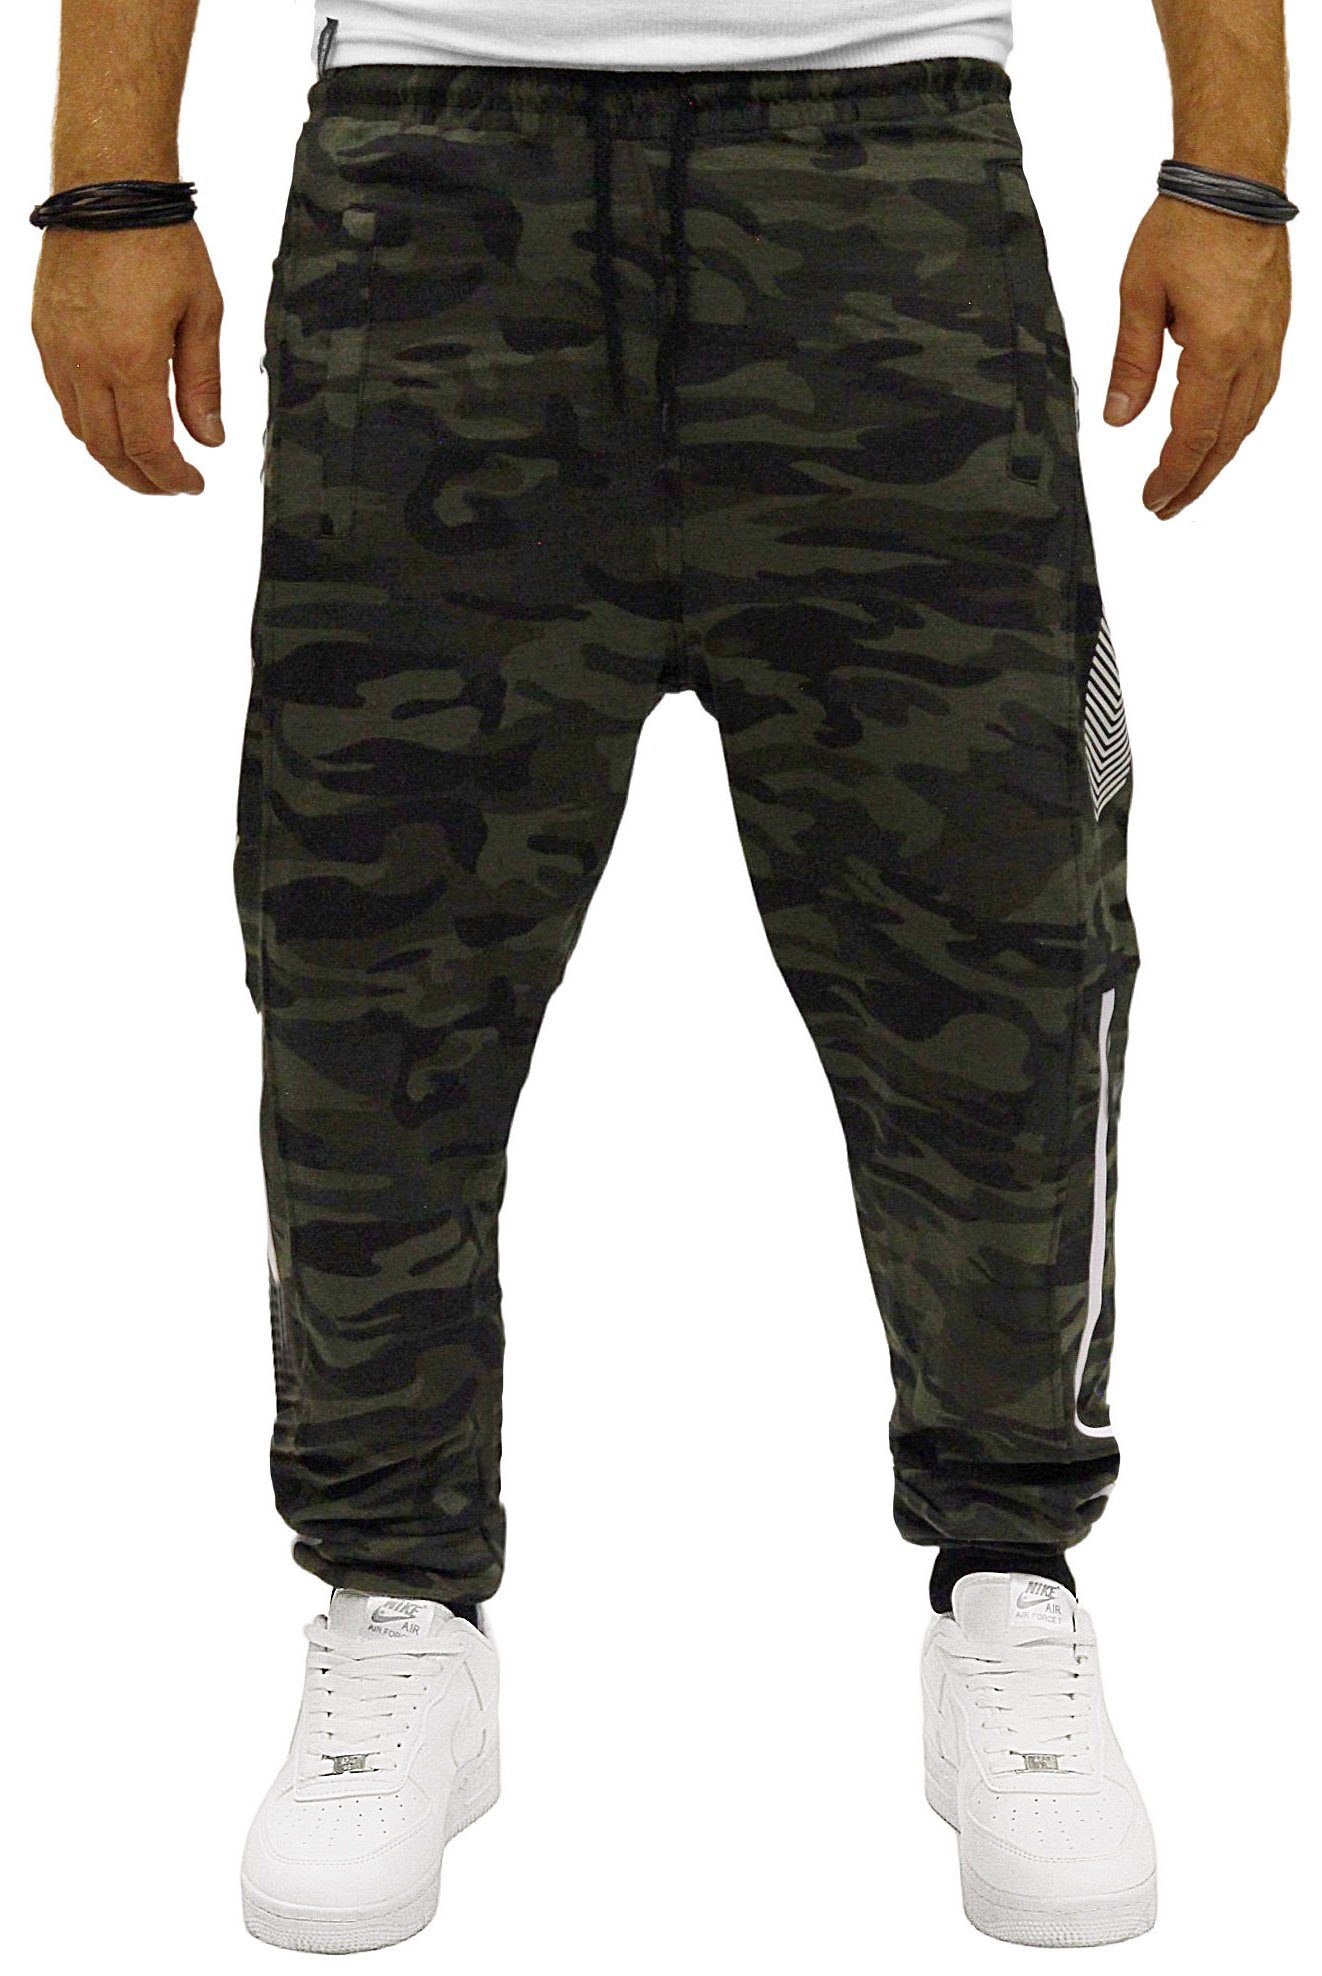 RMK Jogginghose Herren Trainingshose Fitnesshose Camouflage Army Tarn Hose Camouflage-Dunkel (024)